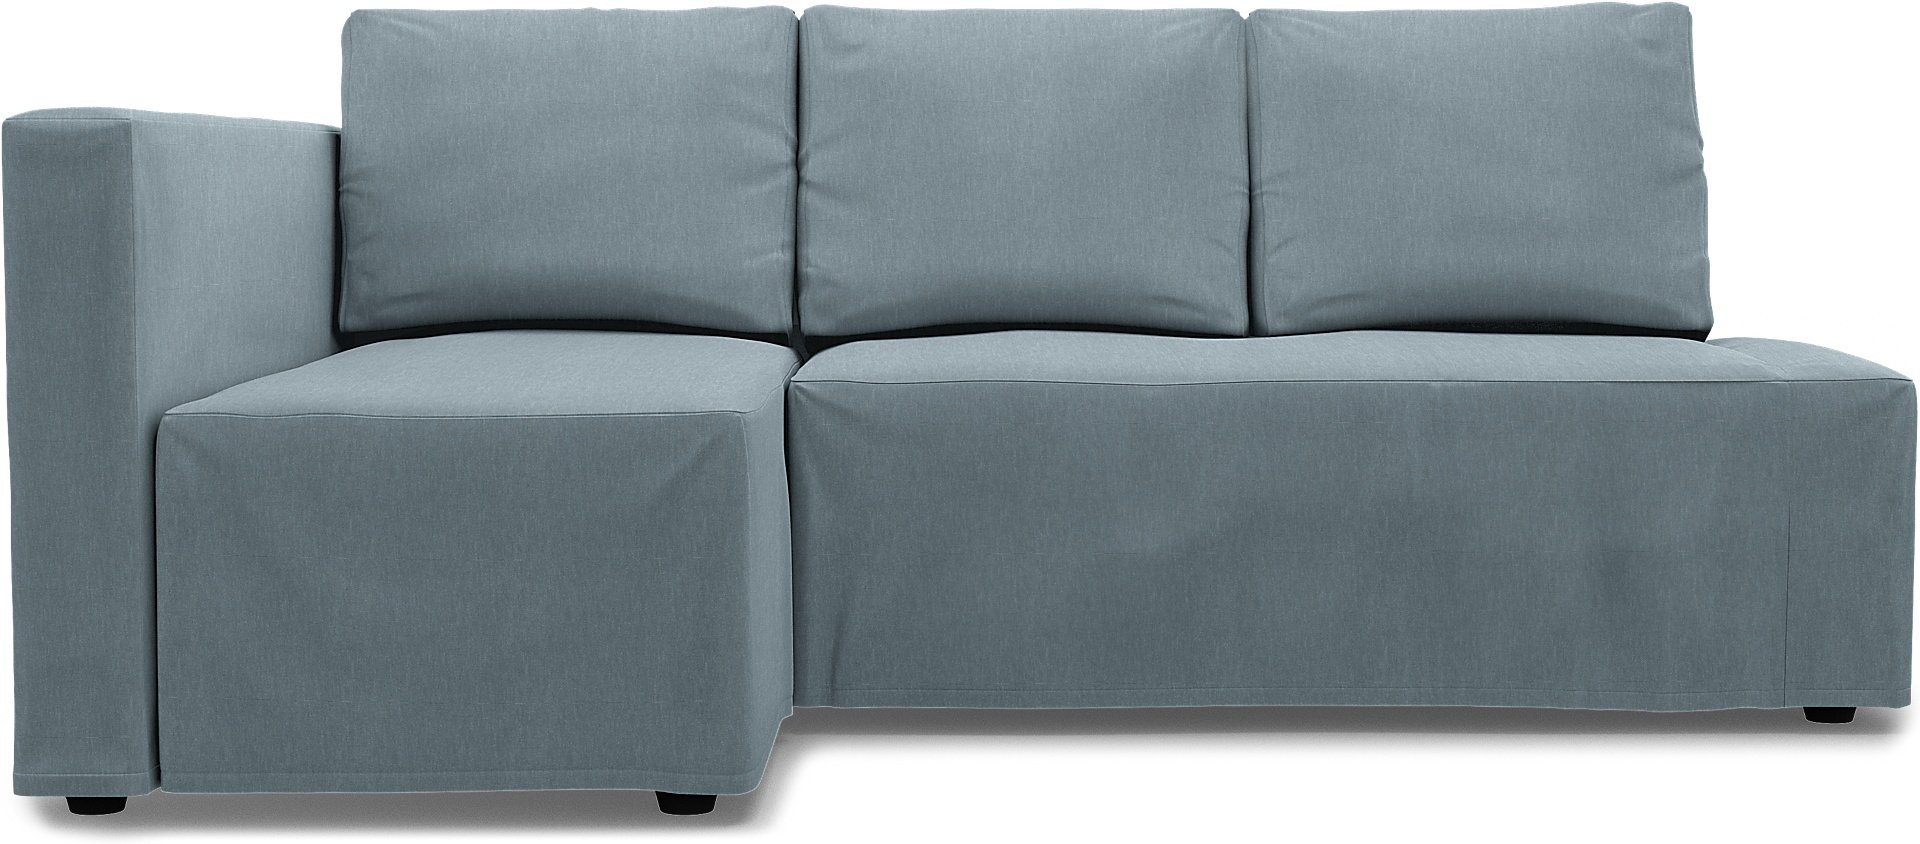 IKEA - Friheten Sofa Bed with Left Chaise Cover, Dusty Blue, Linen - Bemz